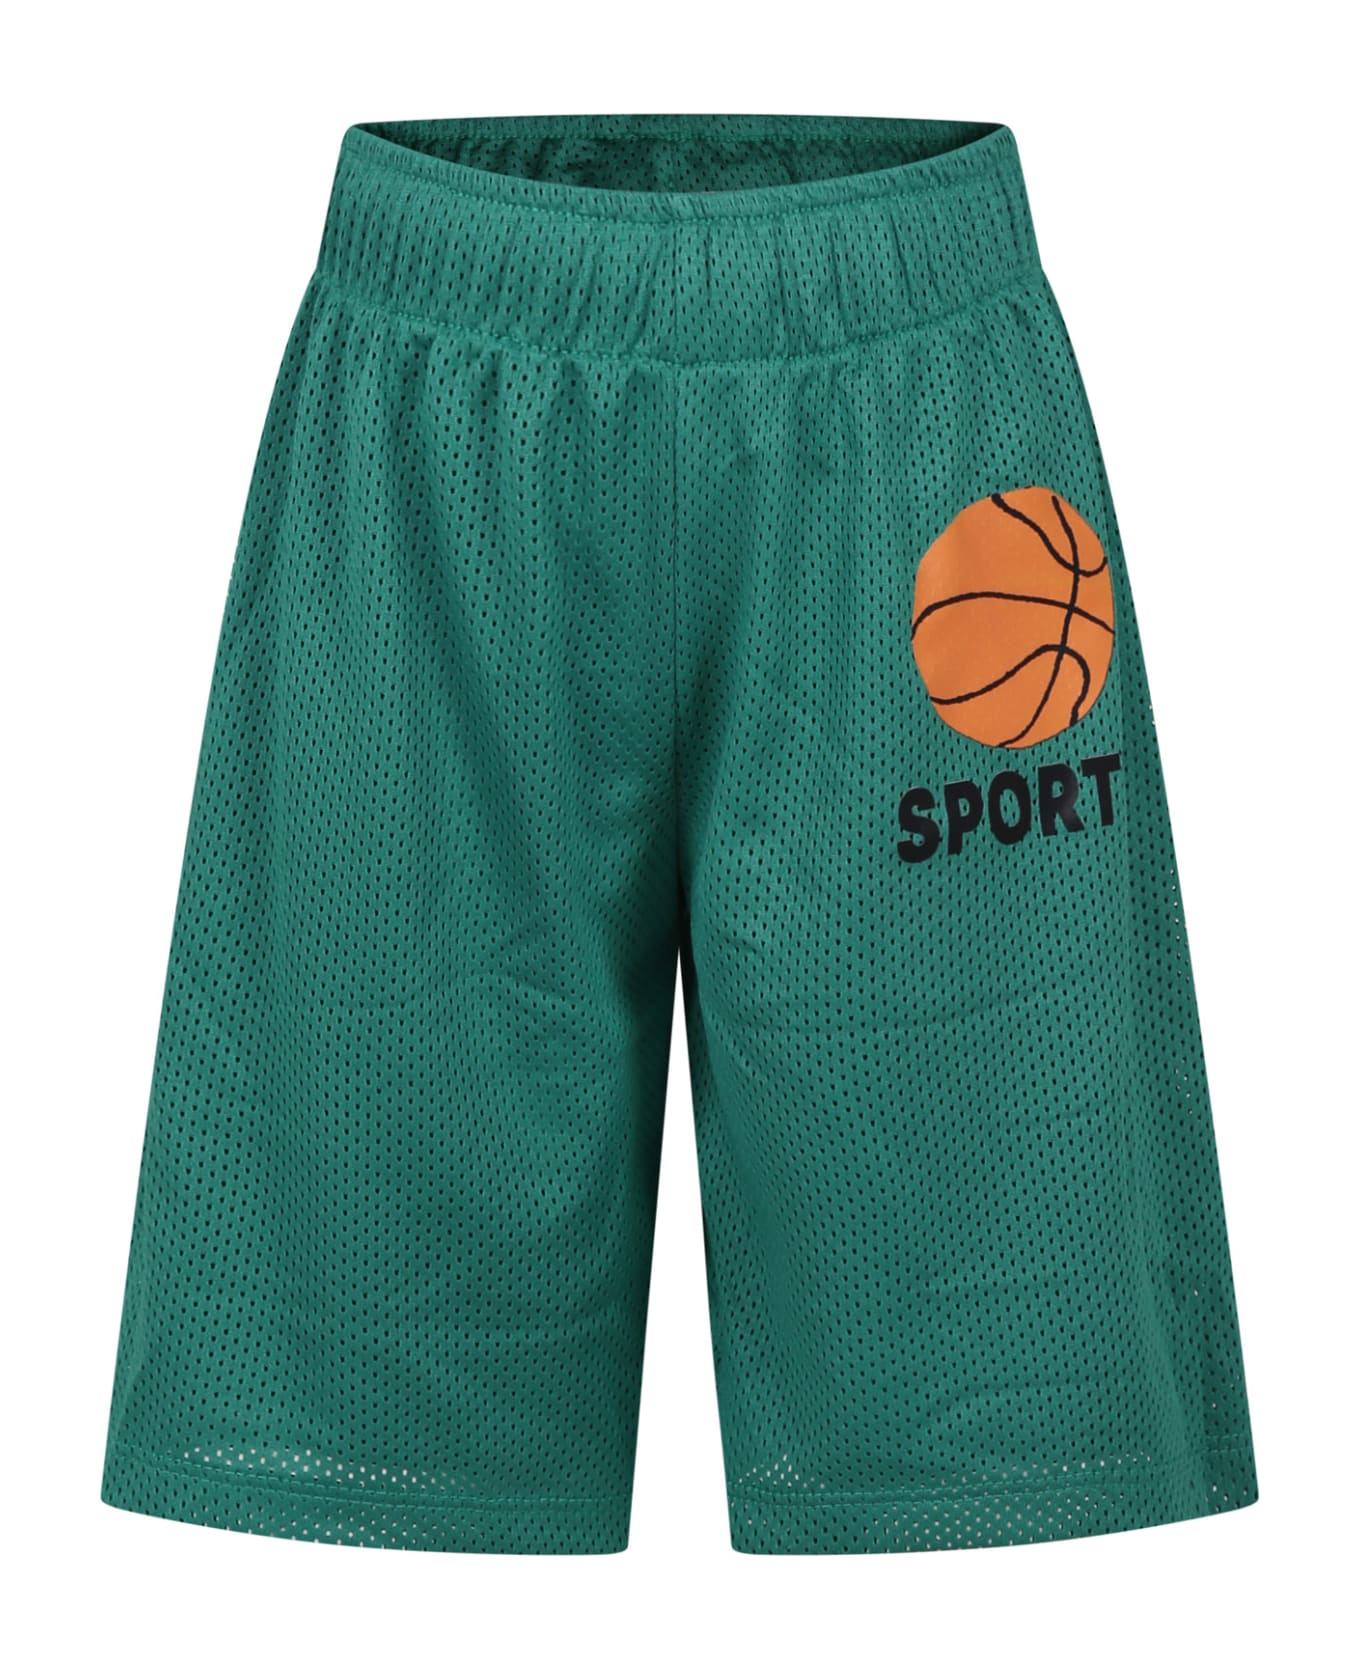 Mini Rodini Green Sports Shorts For Kids With Basketball - Green